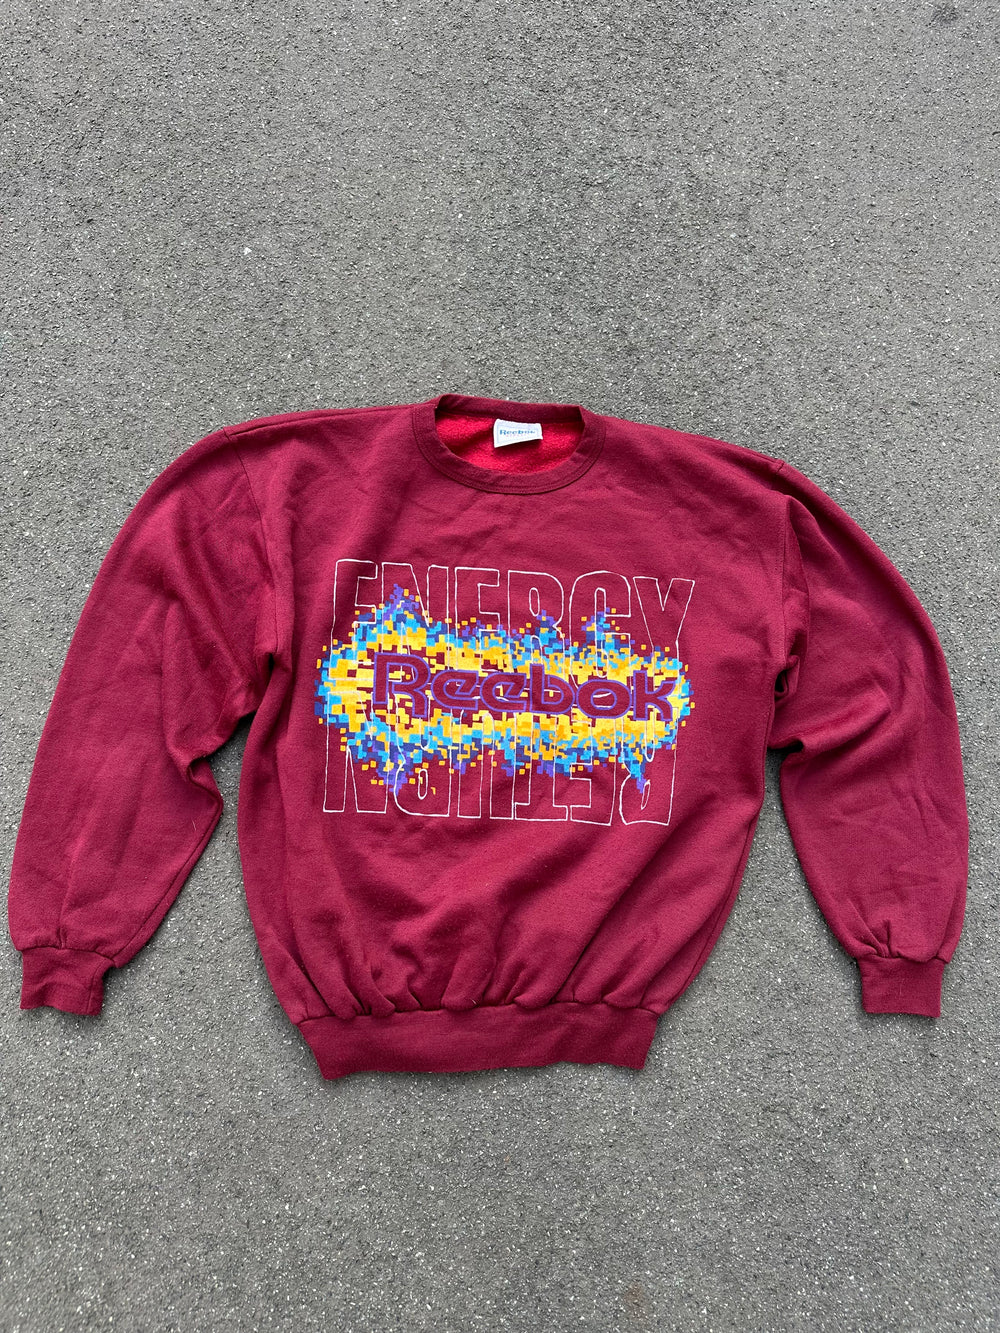 Reebok Apperal Vintage Graphic Sweater (L)